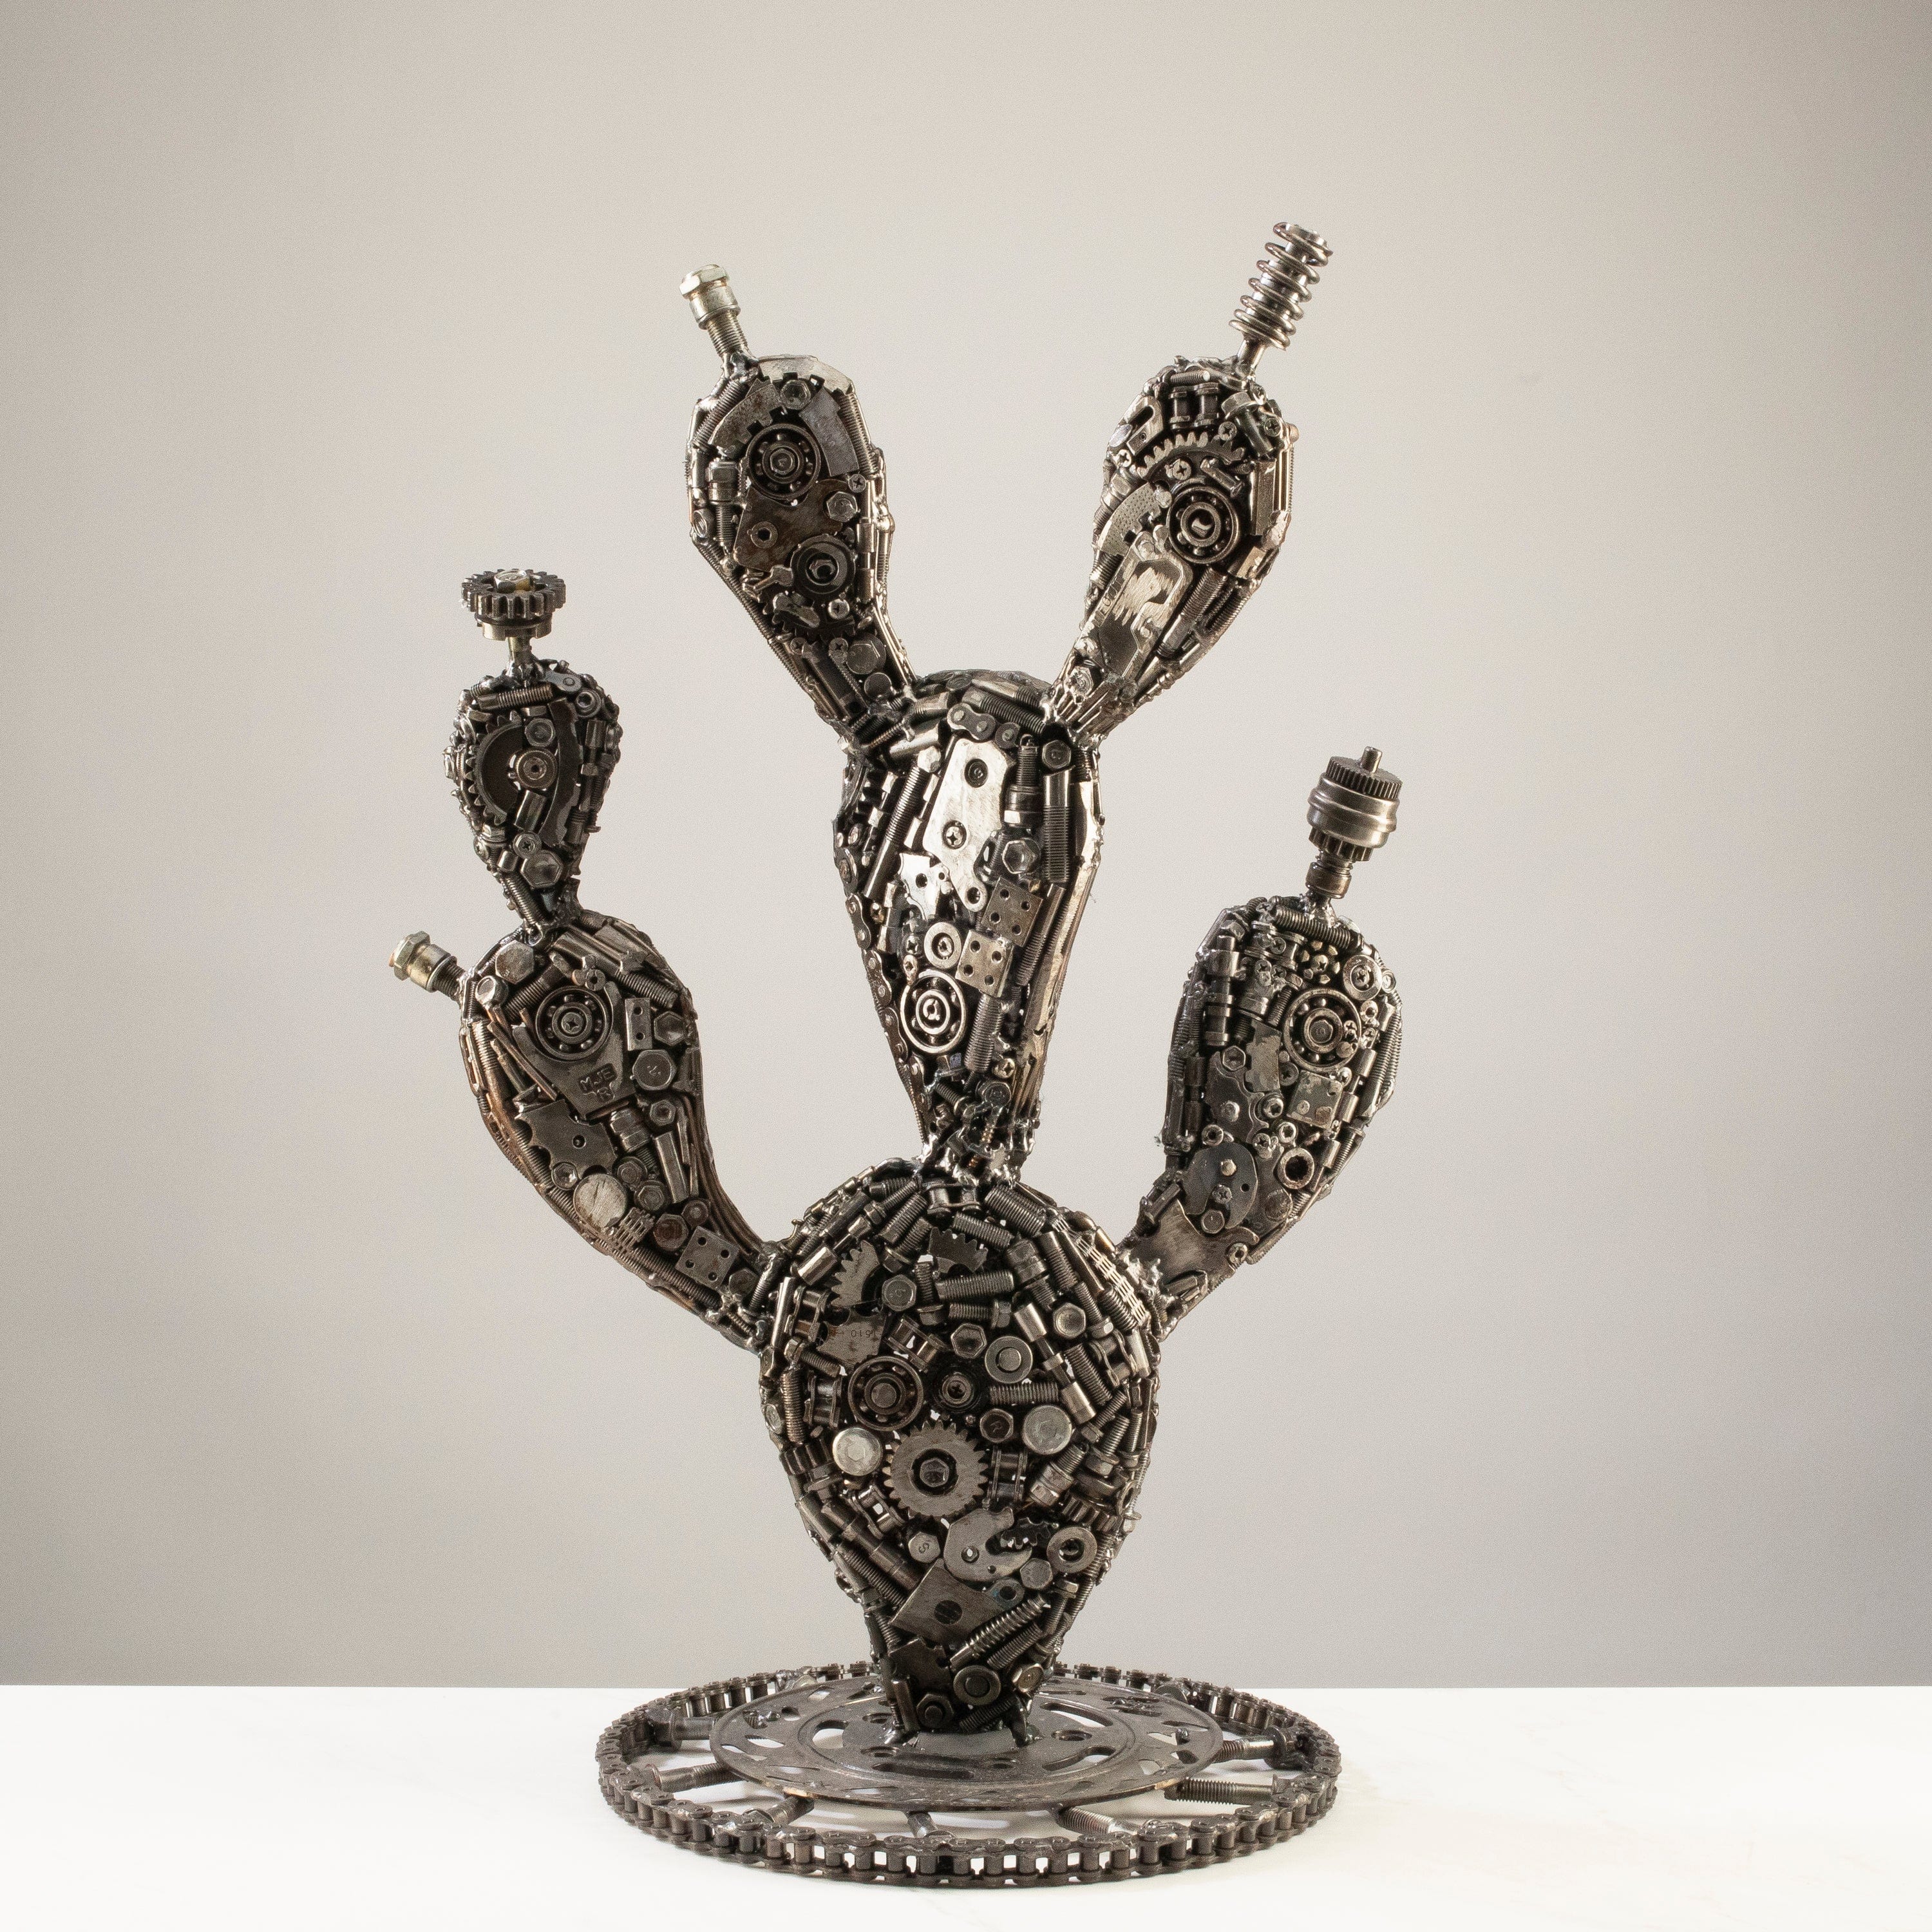 KALIFANO Recycled Metal Art 25" Prickly Cactus Recycled Metal Art Sculpture RMS-PC48x63-PK